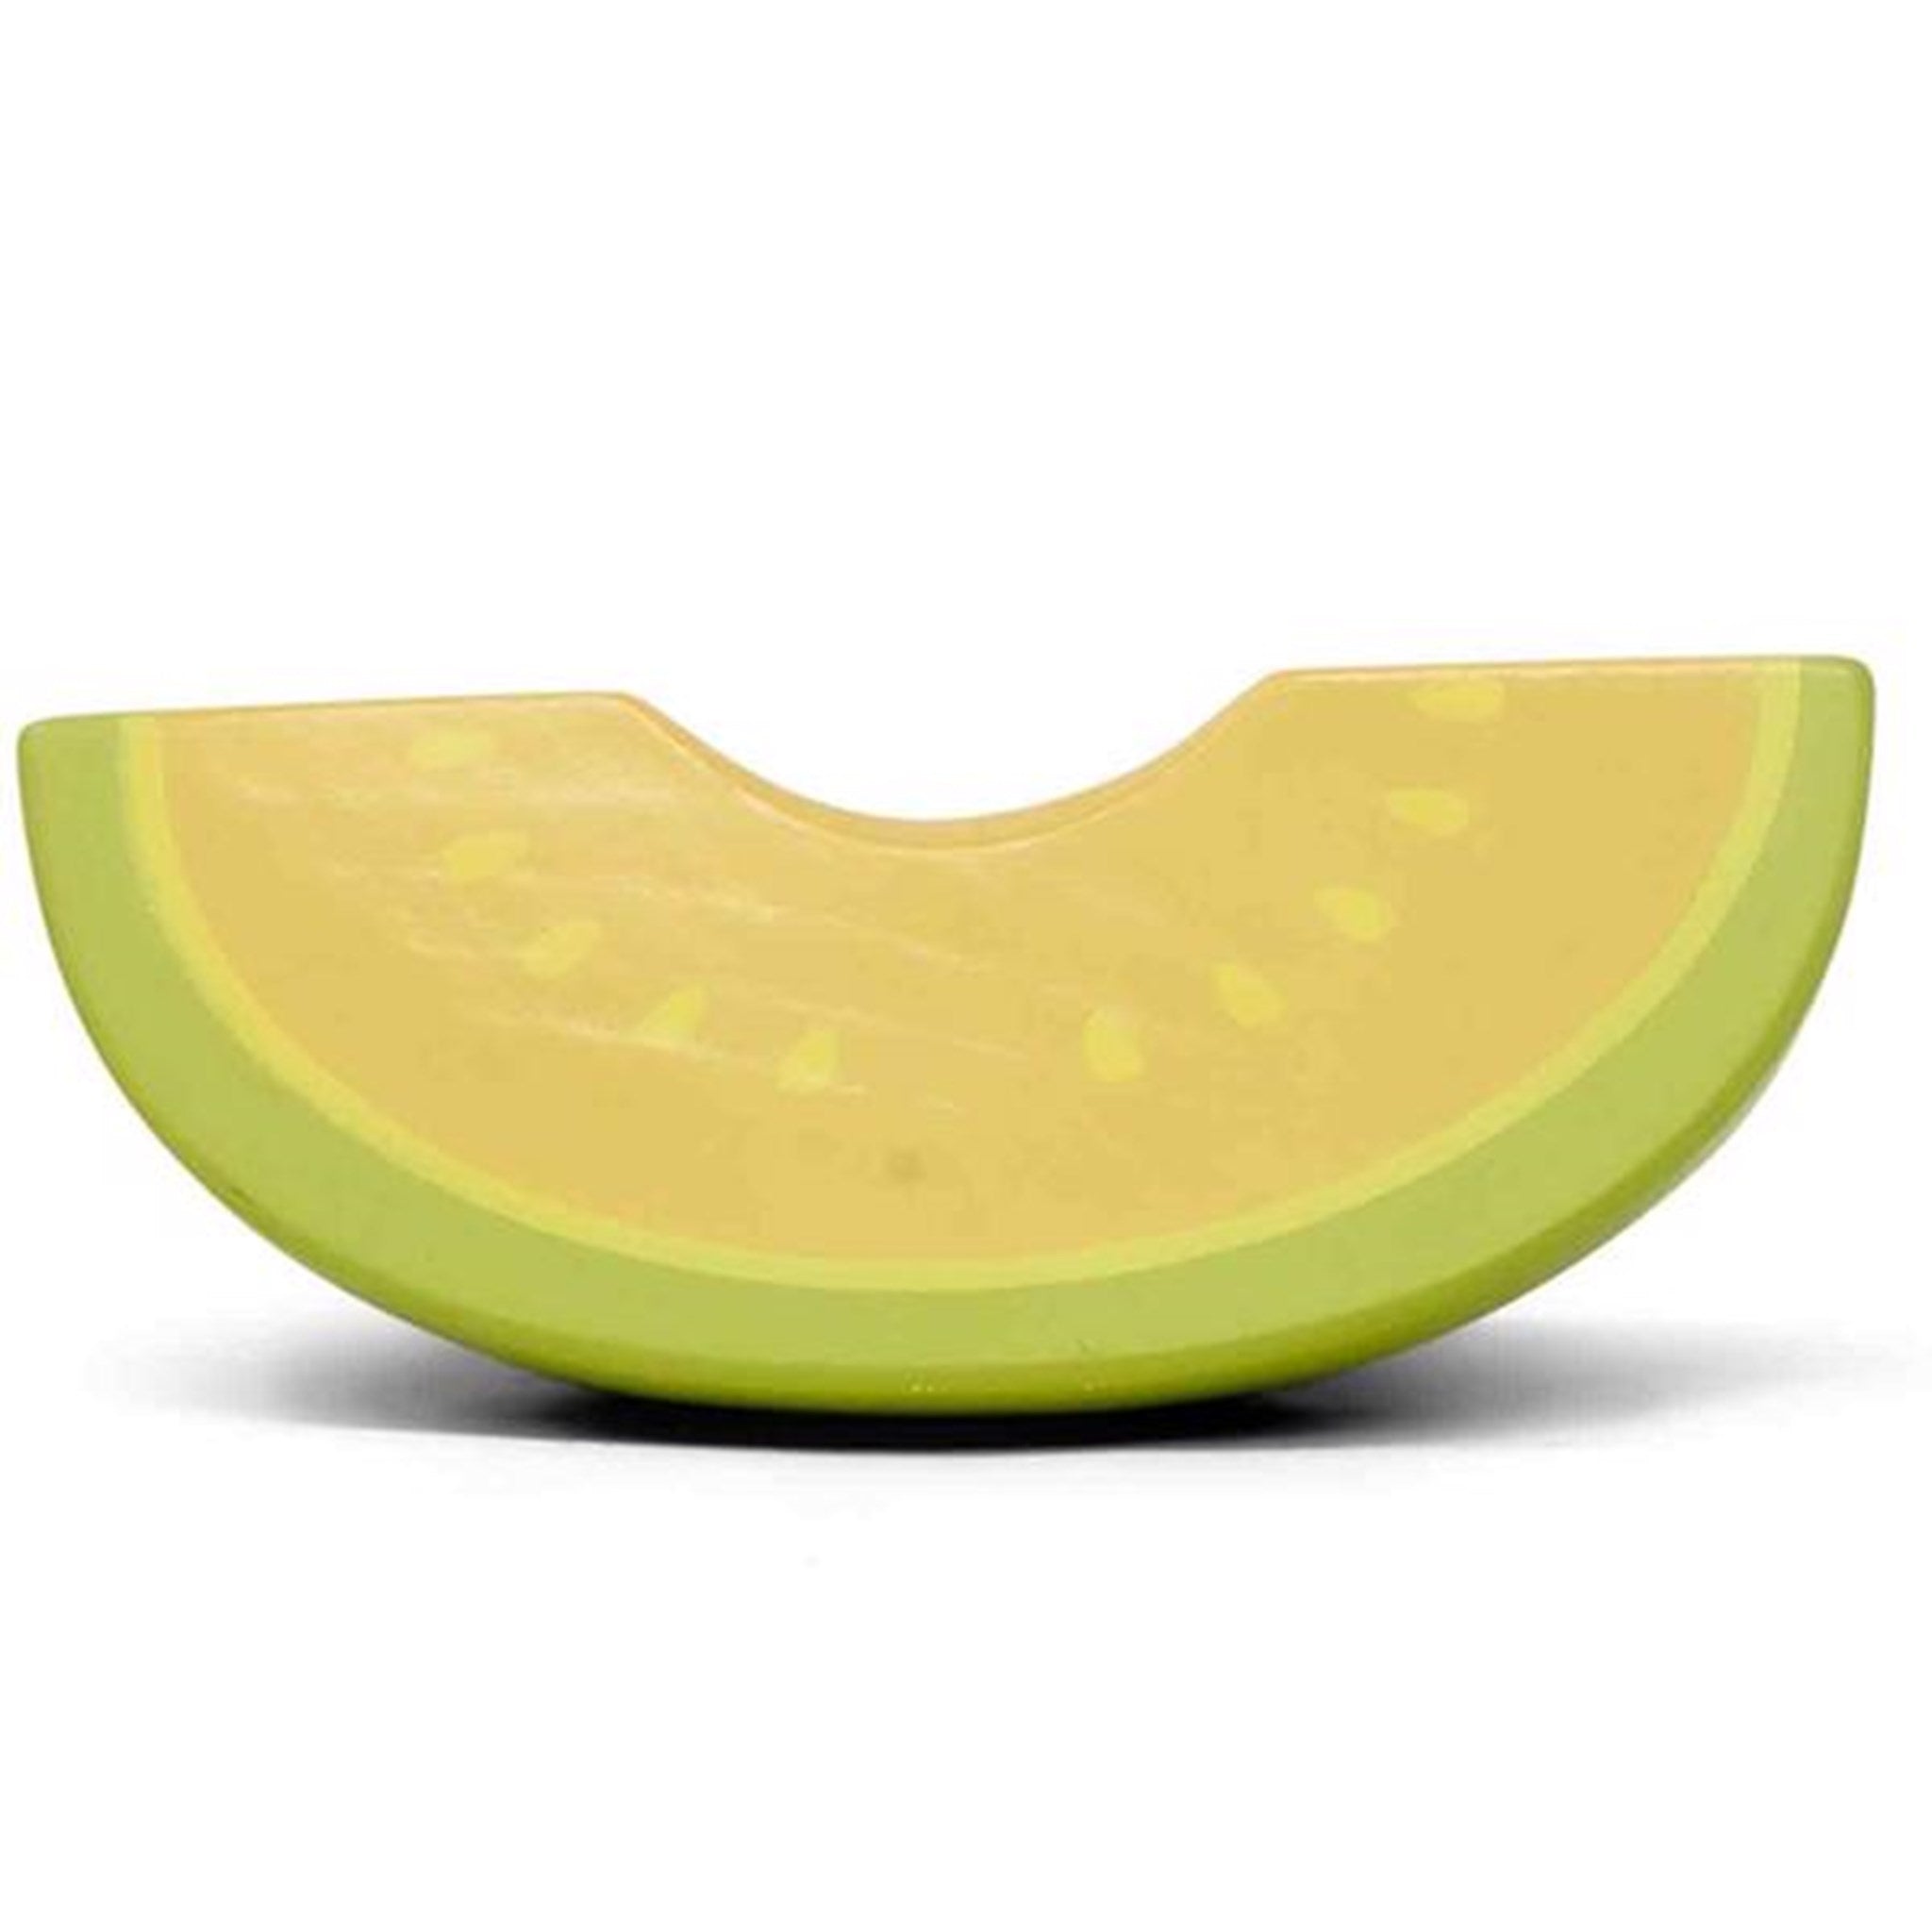 MaMaMemo Cantaloupe Melon